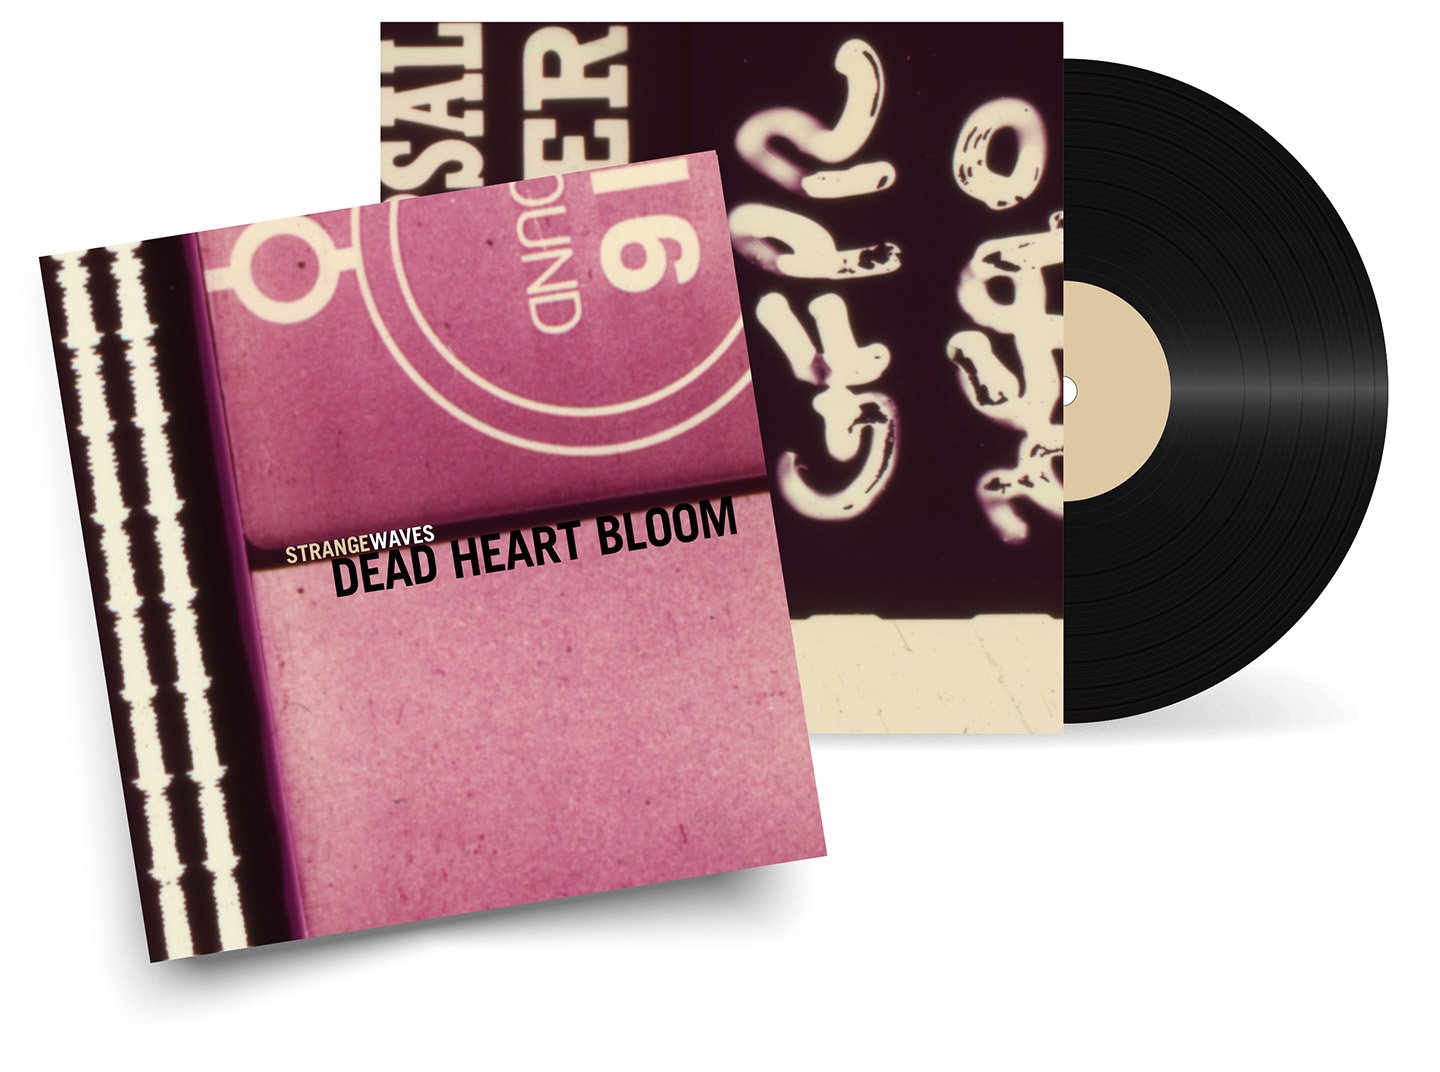 DEAD HEART BLOOM Vinyl record + sleeve